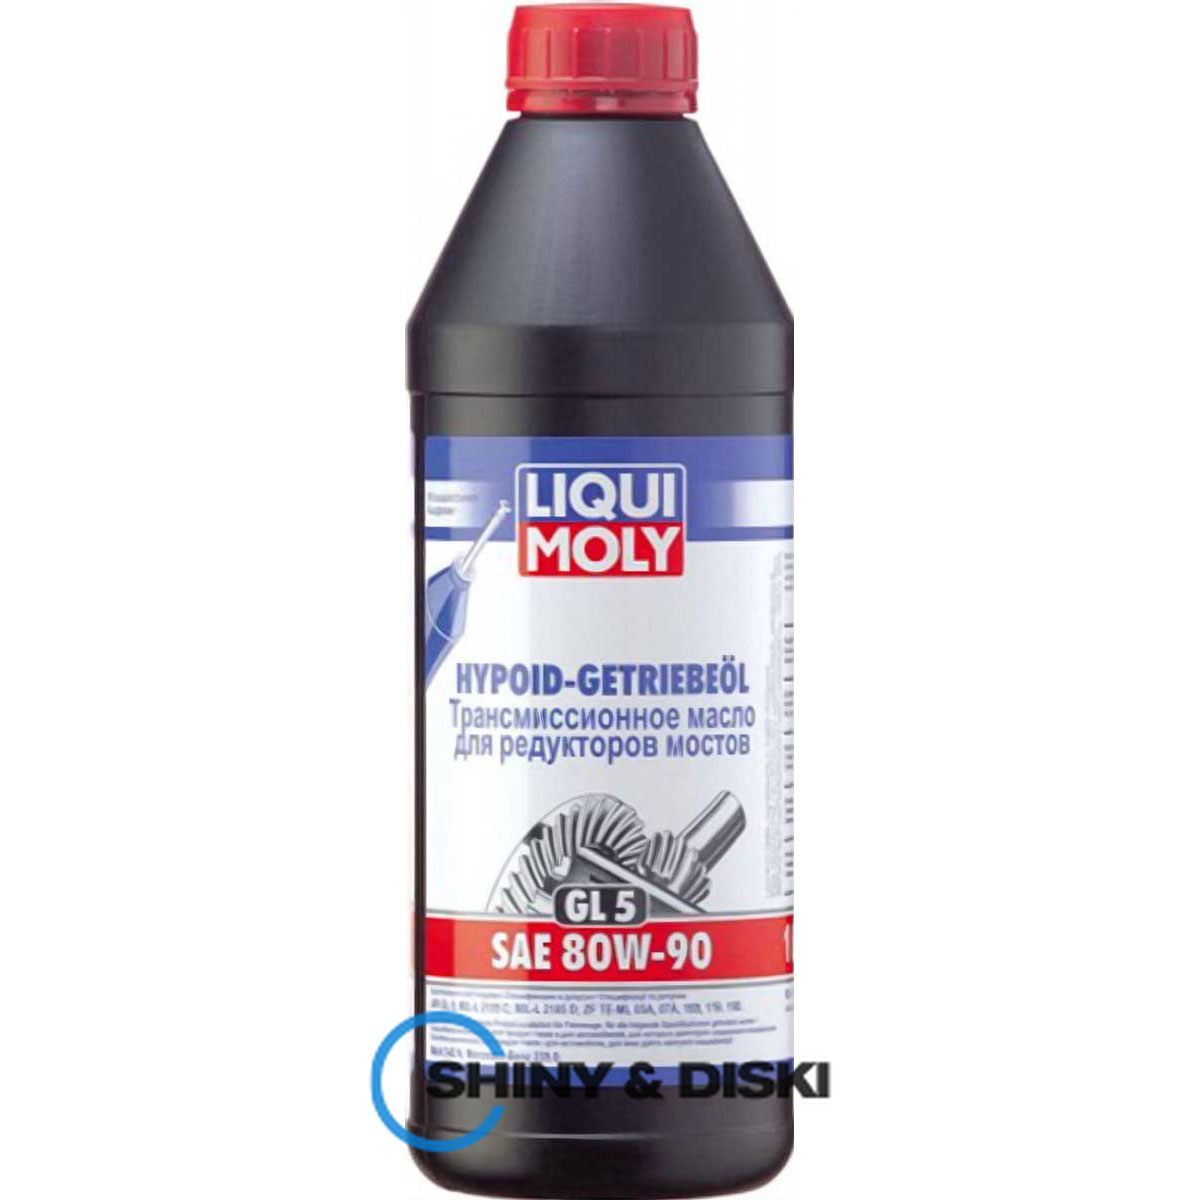 liqui moly hypoid-getriebeoil